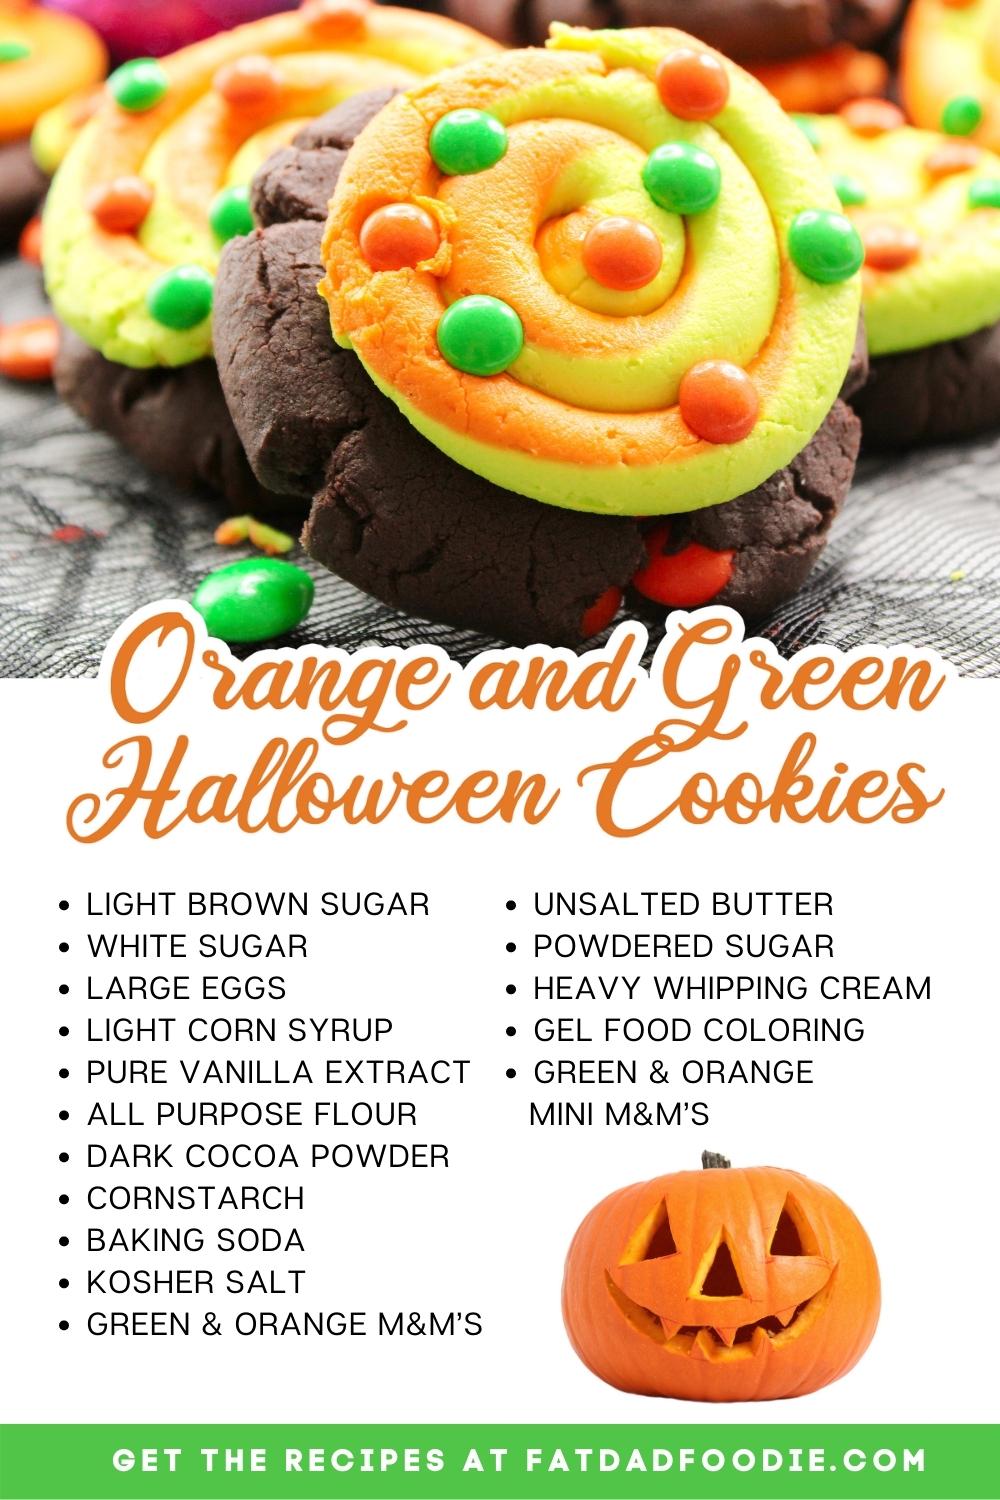 orange and green halloween cookies with ingredients